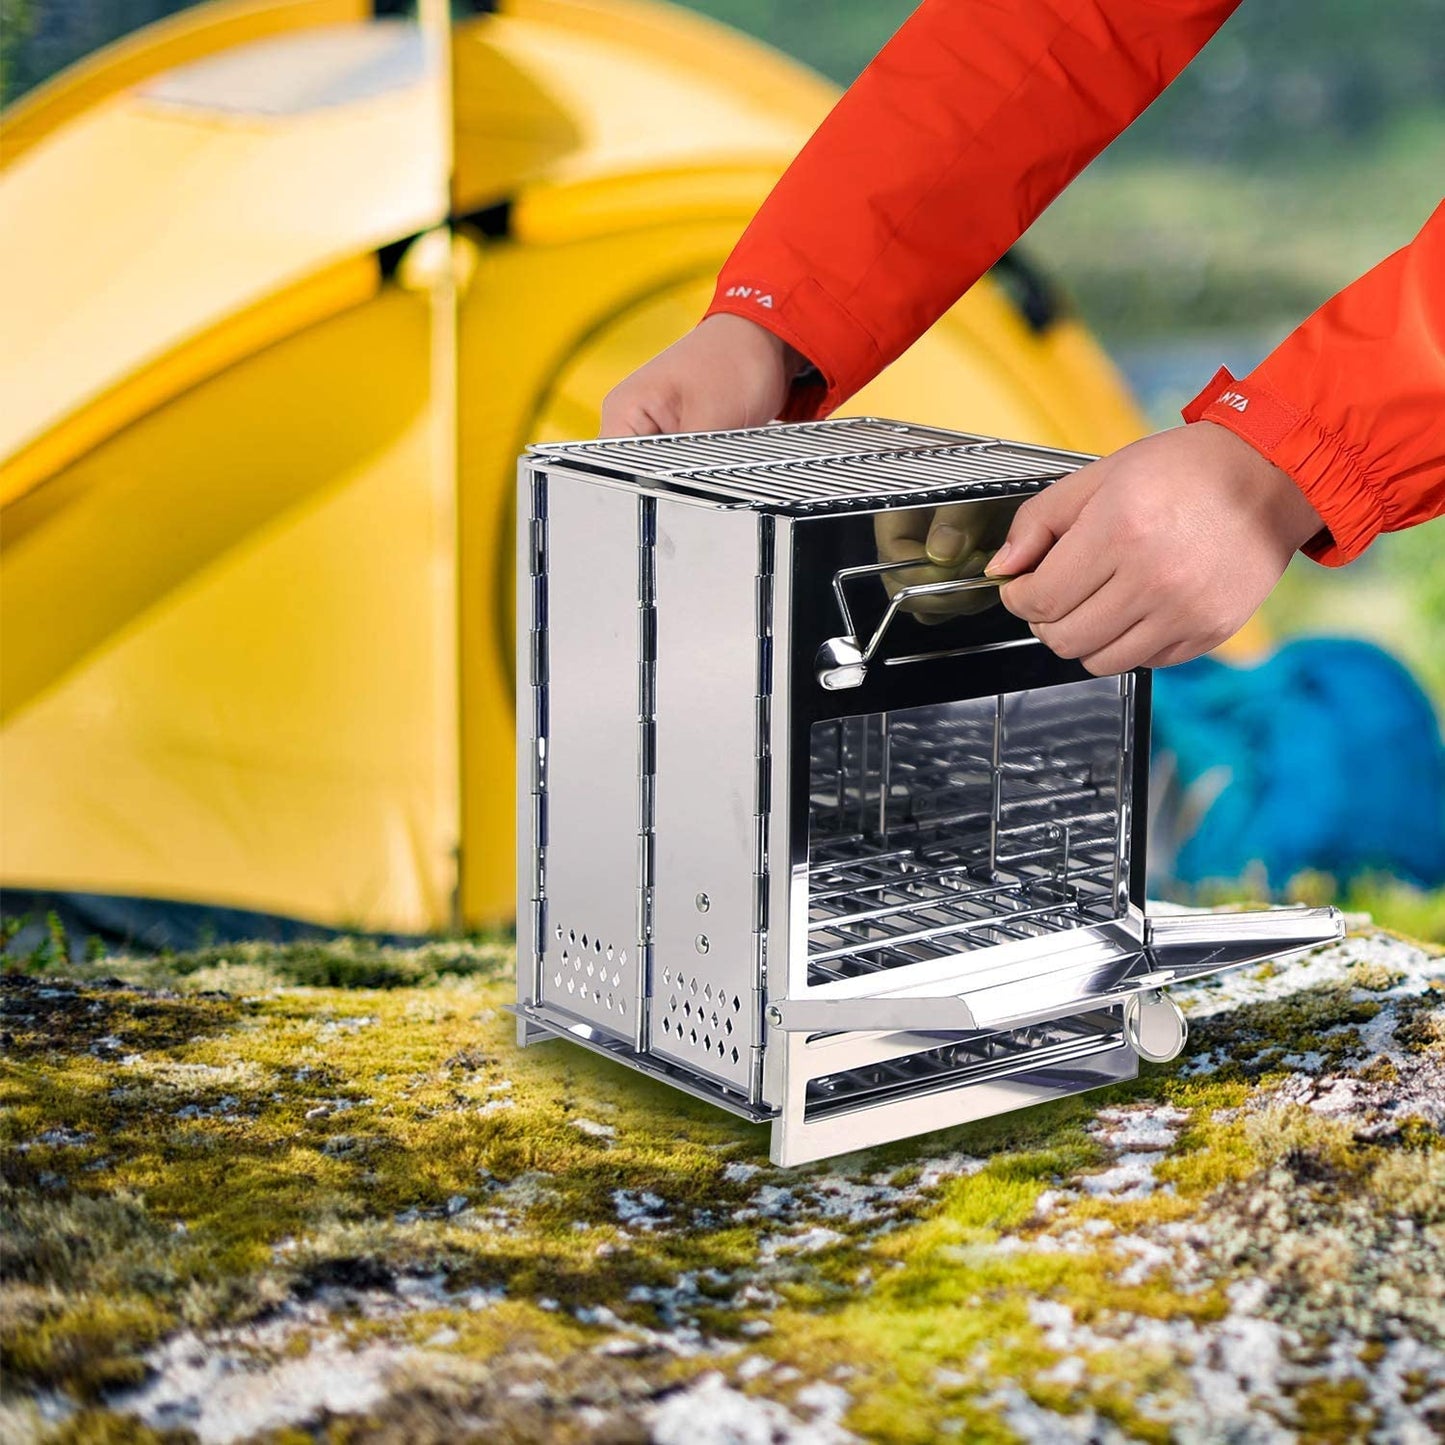 REDCAMP Portable Wood Burning Camp Stove, Large Folding Rocket Stove for Hiking Camping Picnic BBQ